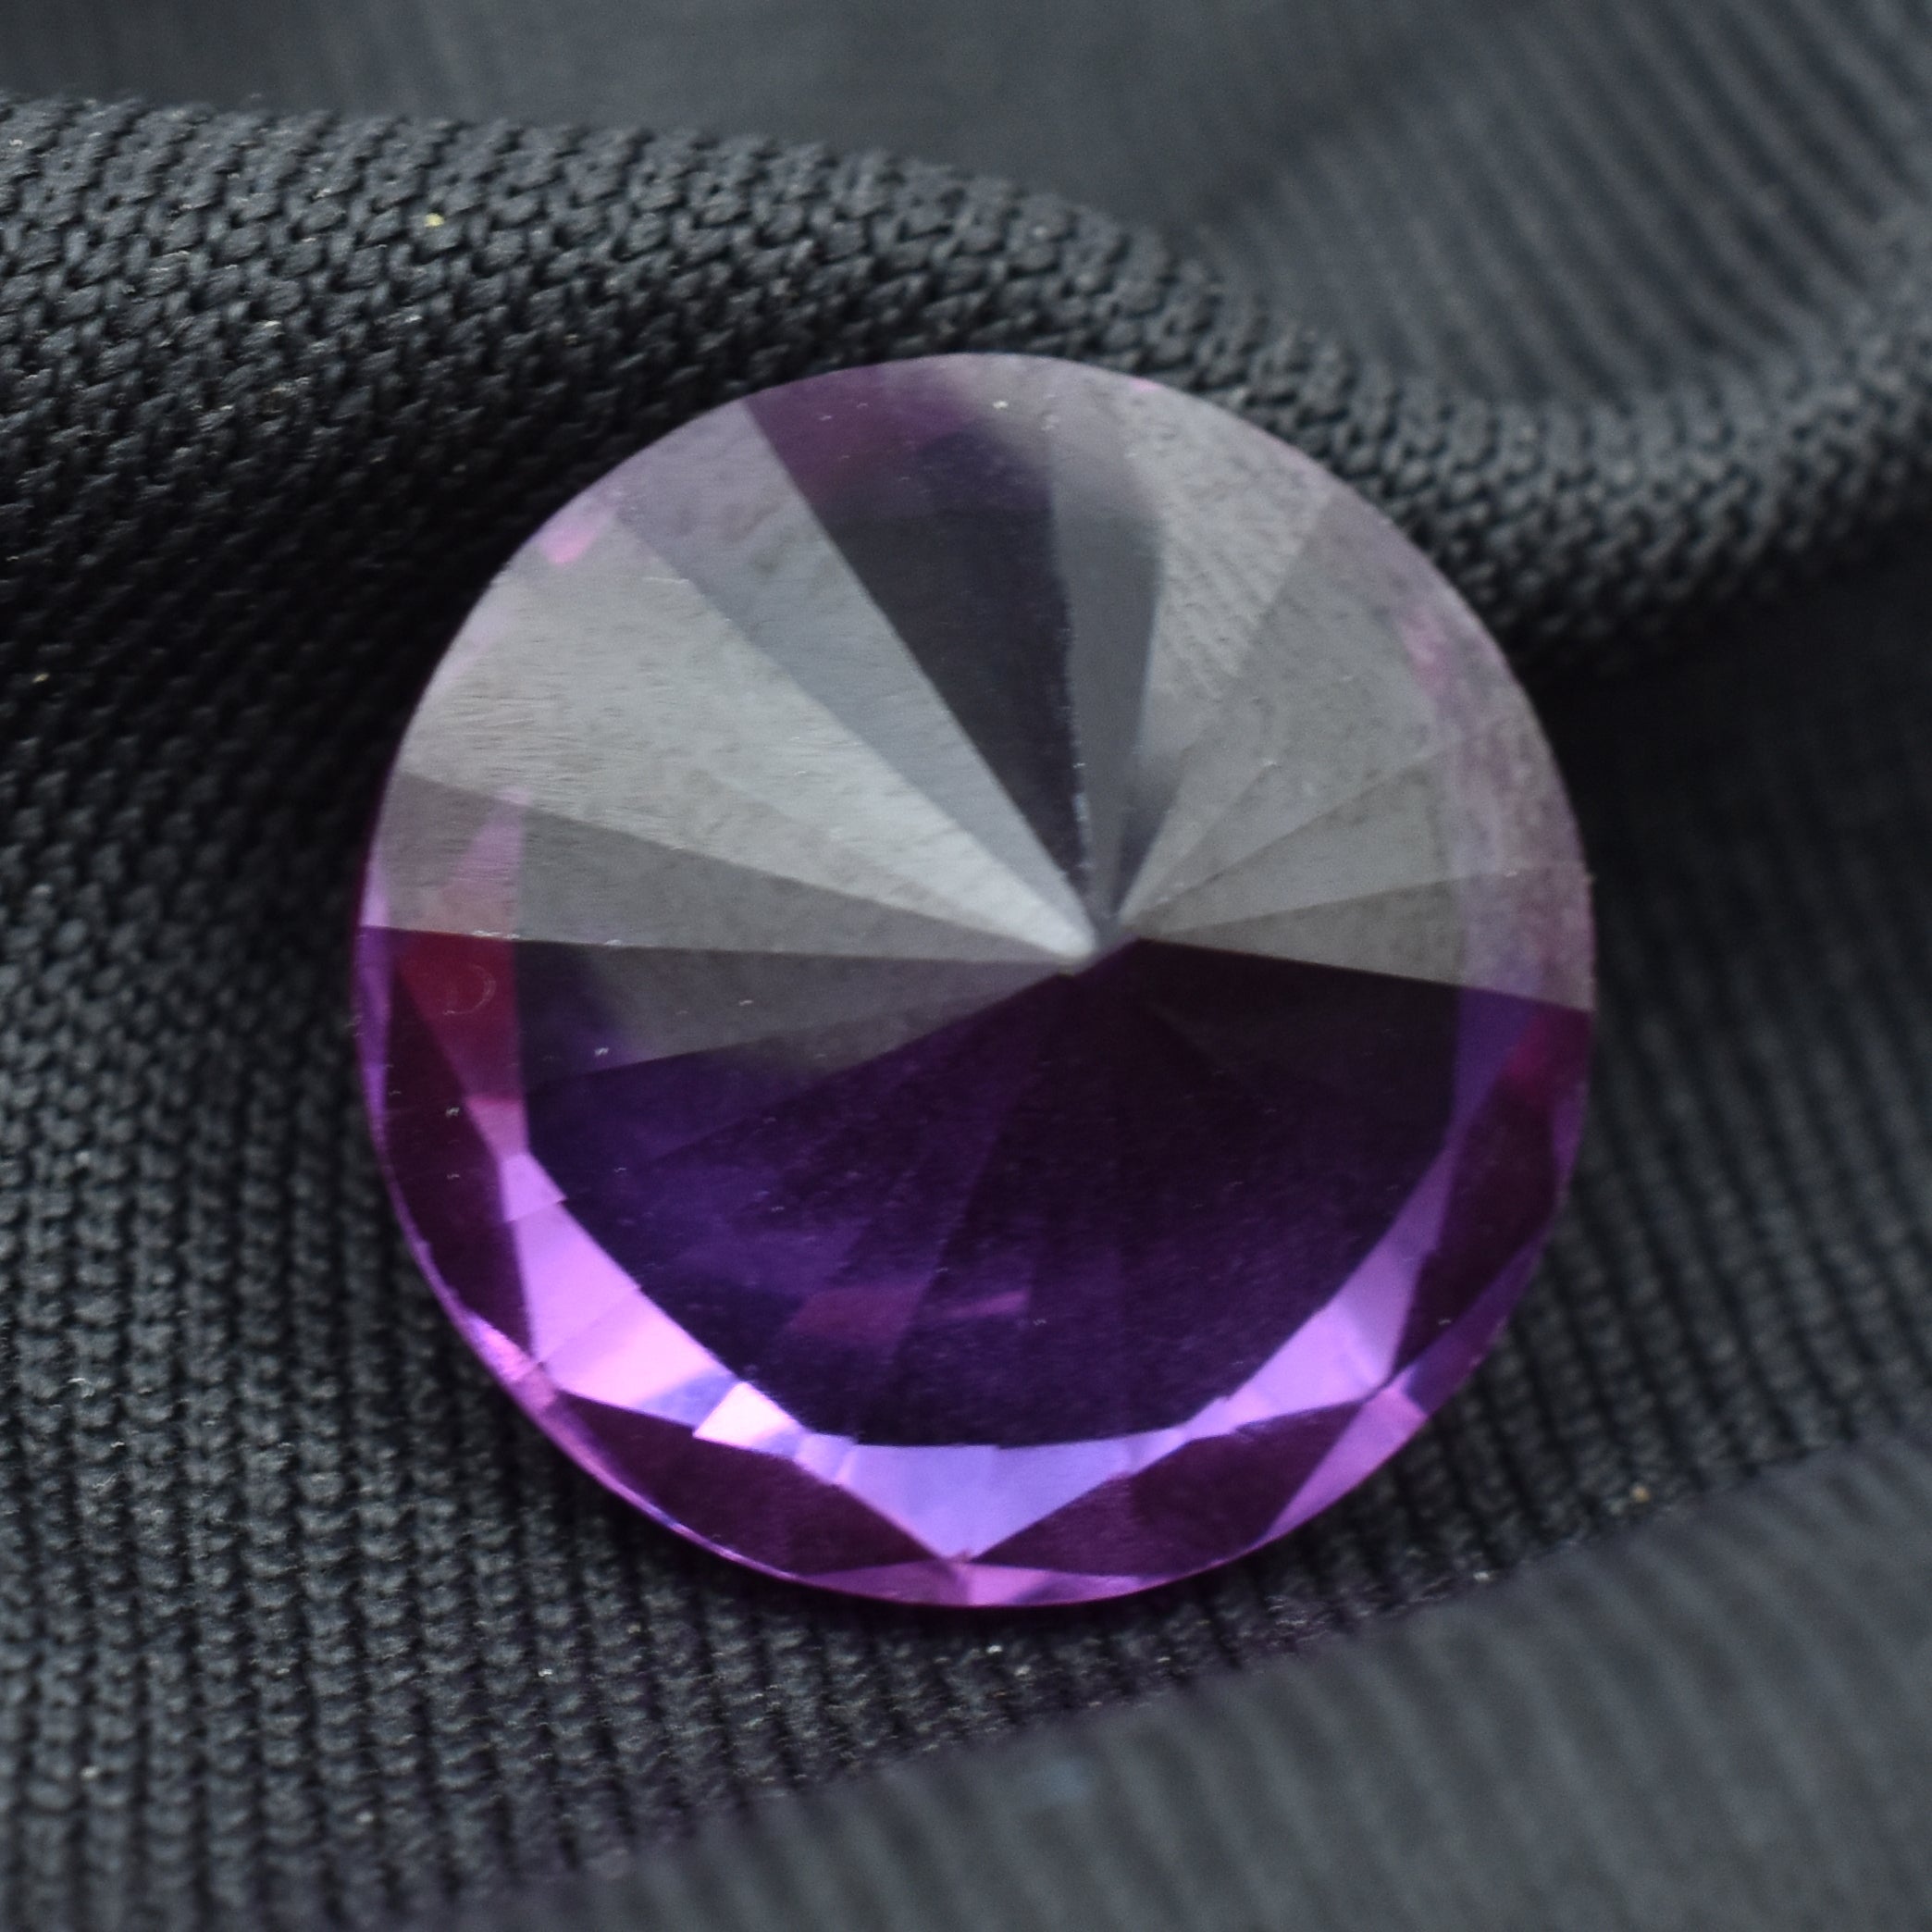 Beautiful Round Cut Purple Tanzanite 9.10 Carat Certified Natural Loose Gemstone Amazing Offer On Tanzanite Gem With Gift